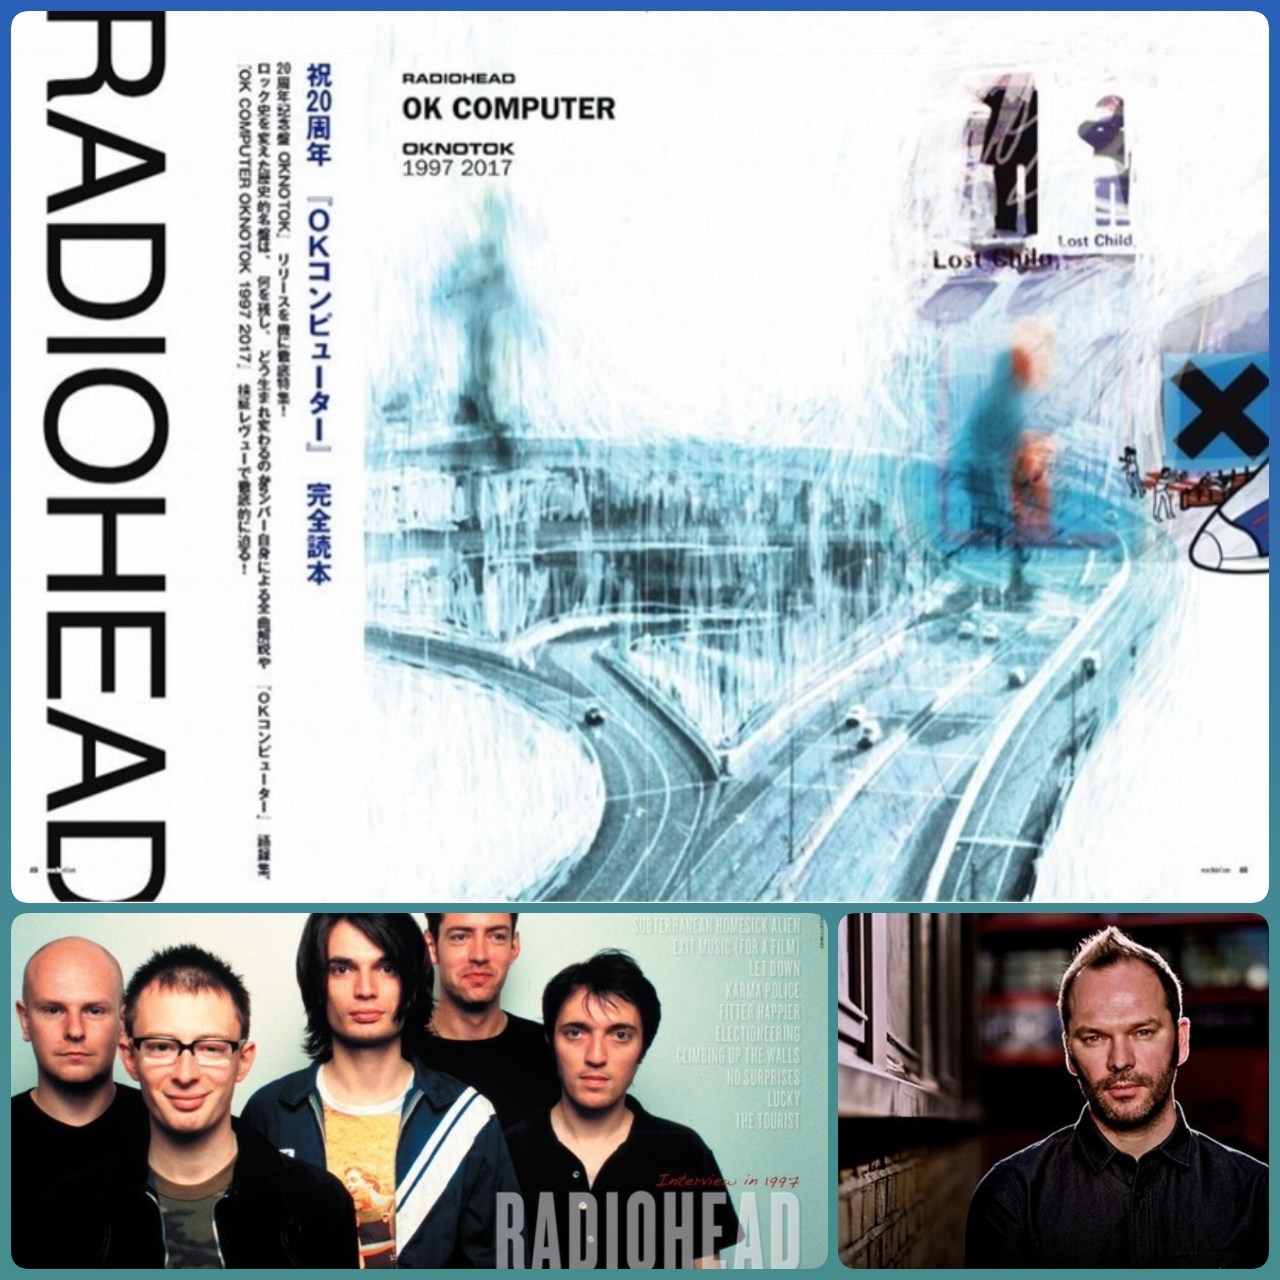 collage-okcomputer-1997-2017-radiohead.jpg